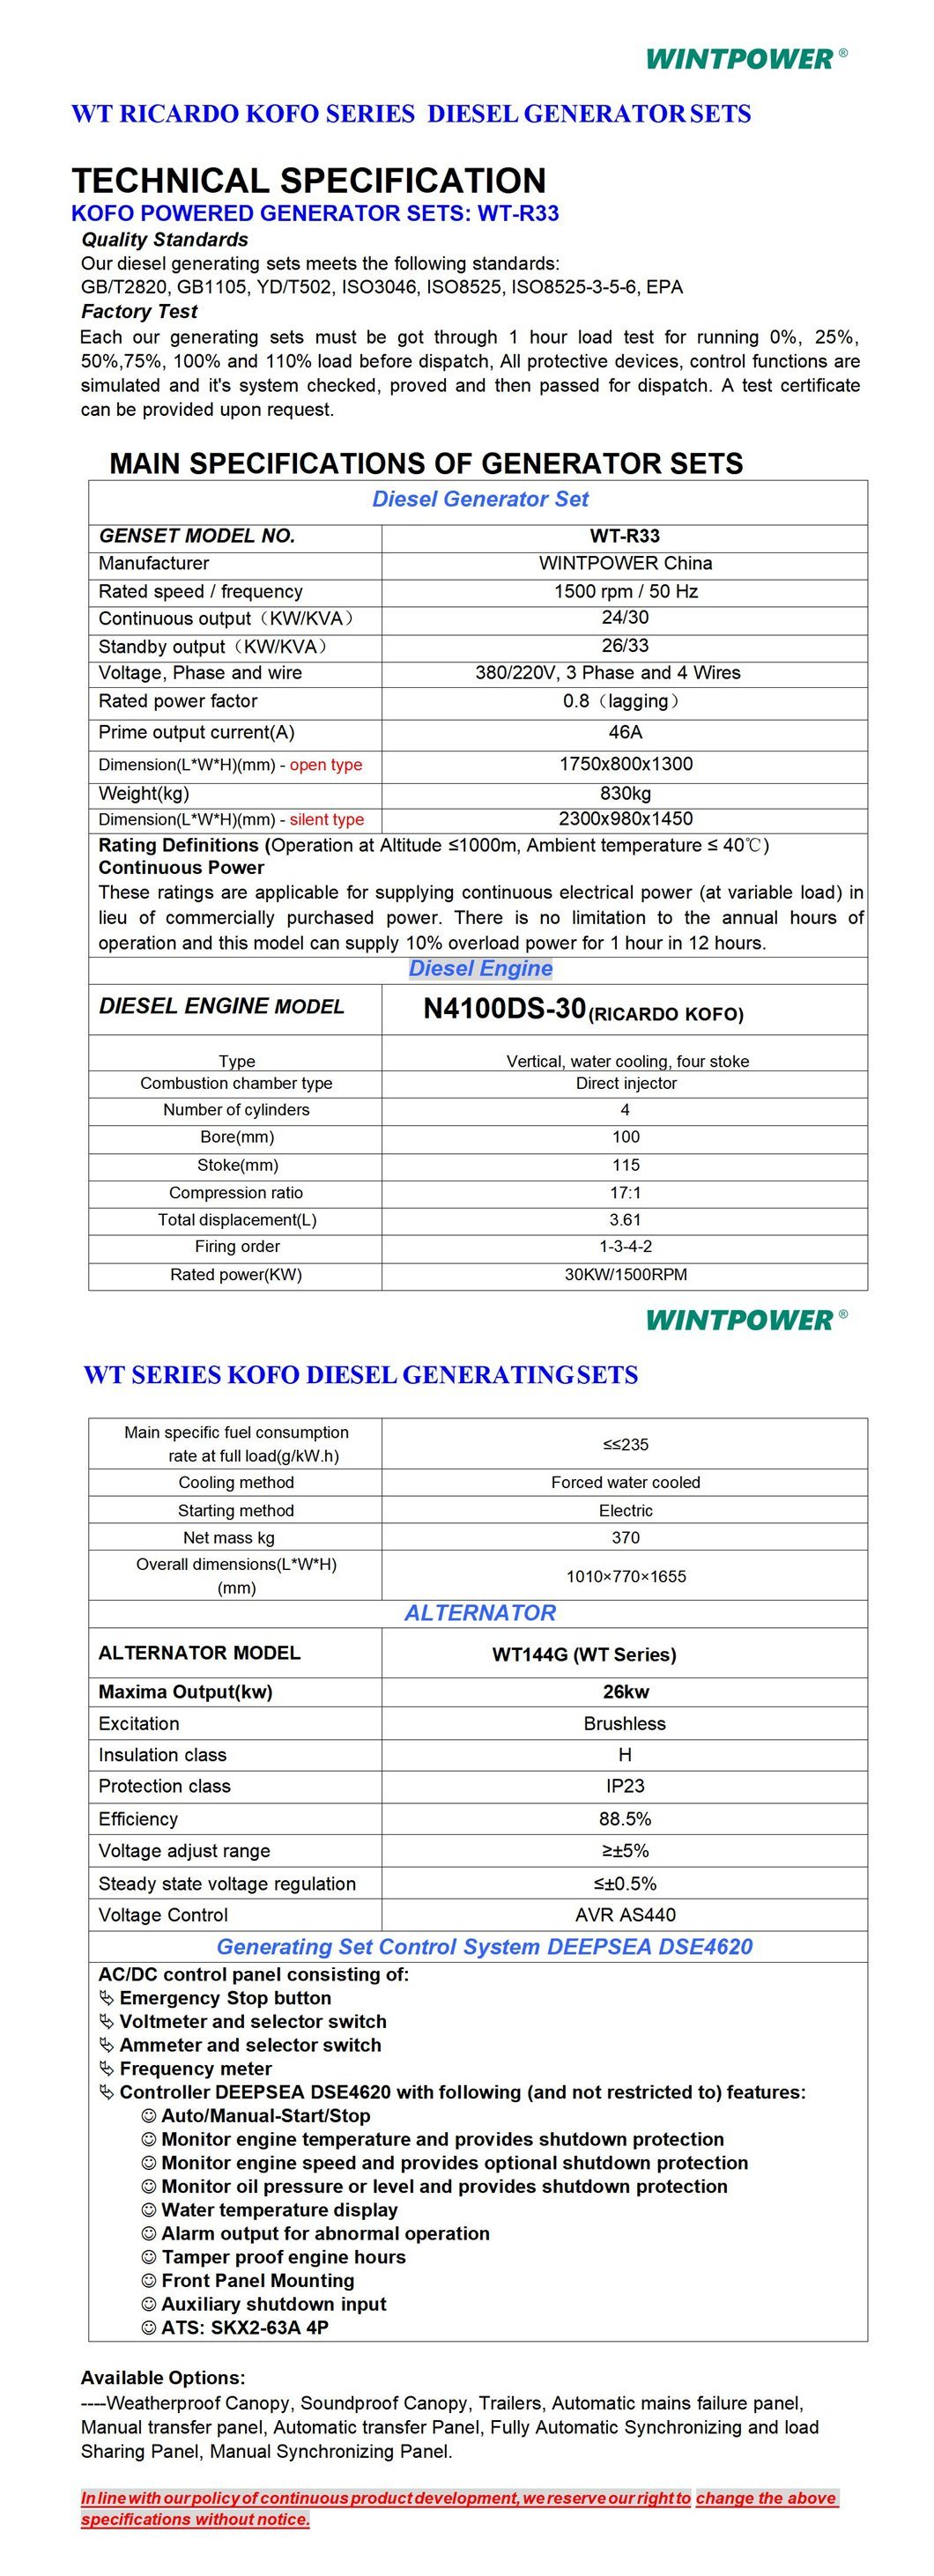 Grupo electrógeno Weichai Kofo Ricardo Motor diésel DG Genset 120kVA 4rt55-110d Tipo silencioso insonorizado 400/230V 380/220V 208/110V 440V 480V 600V 50Hz 60Hz